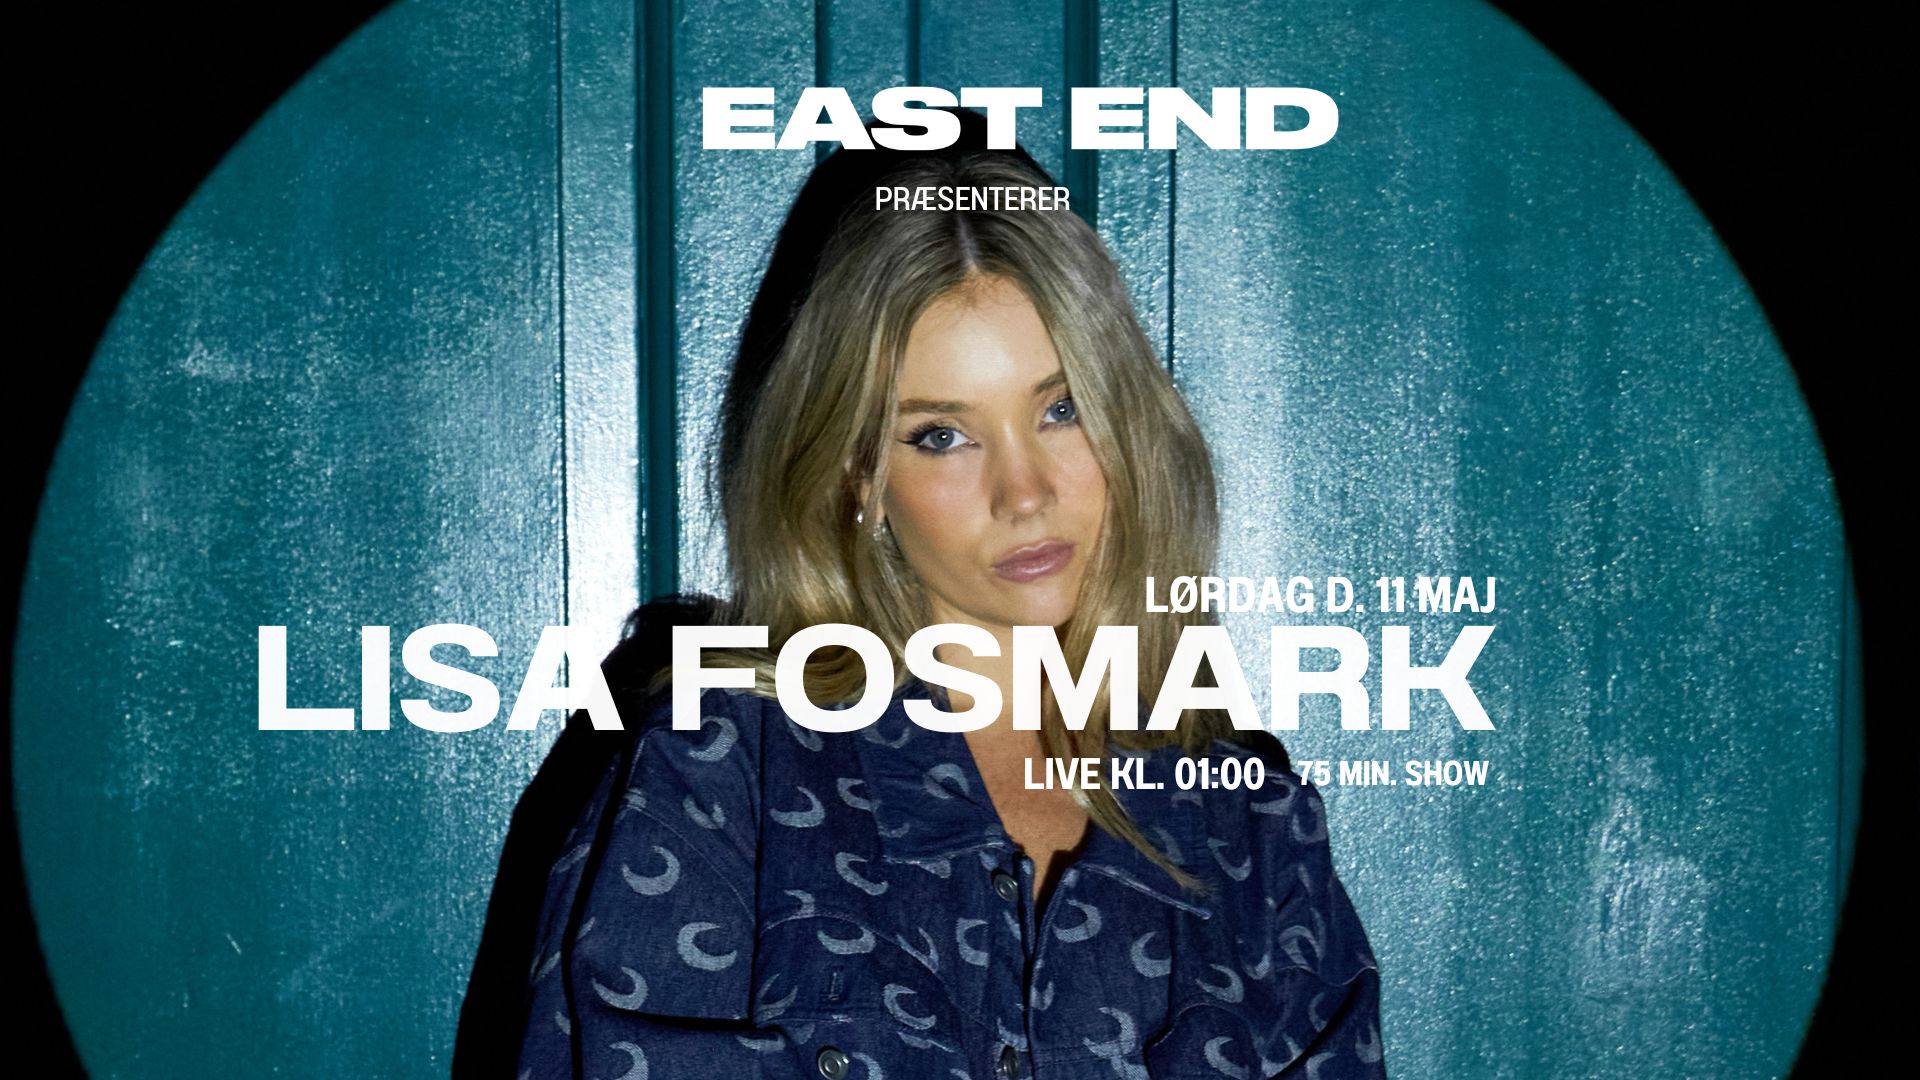 Lisa Fosmark x East End // EAST END